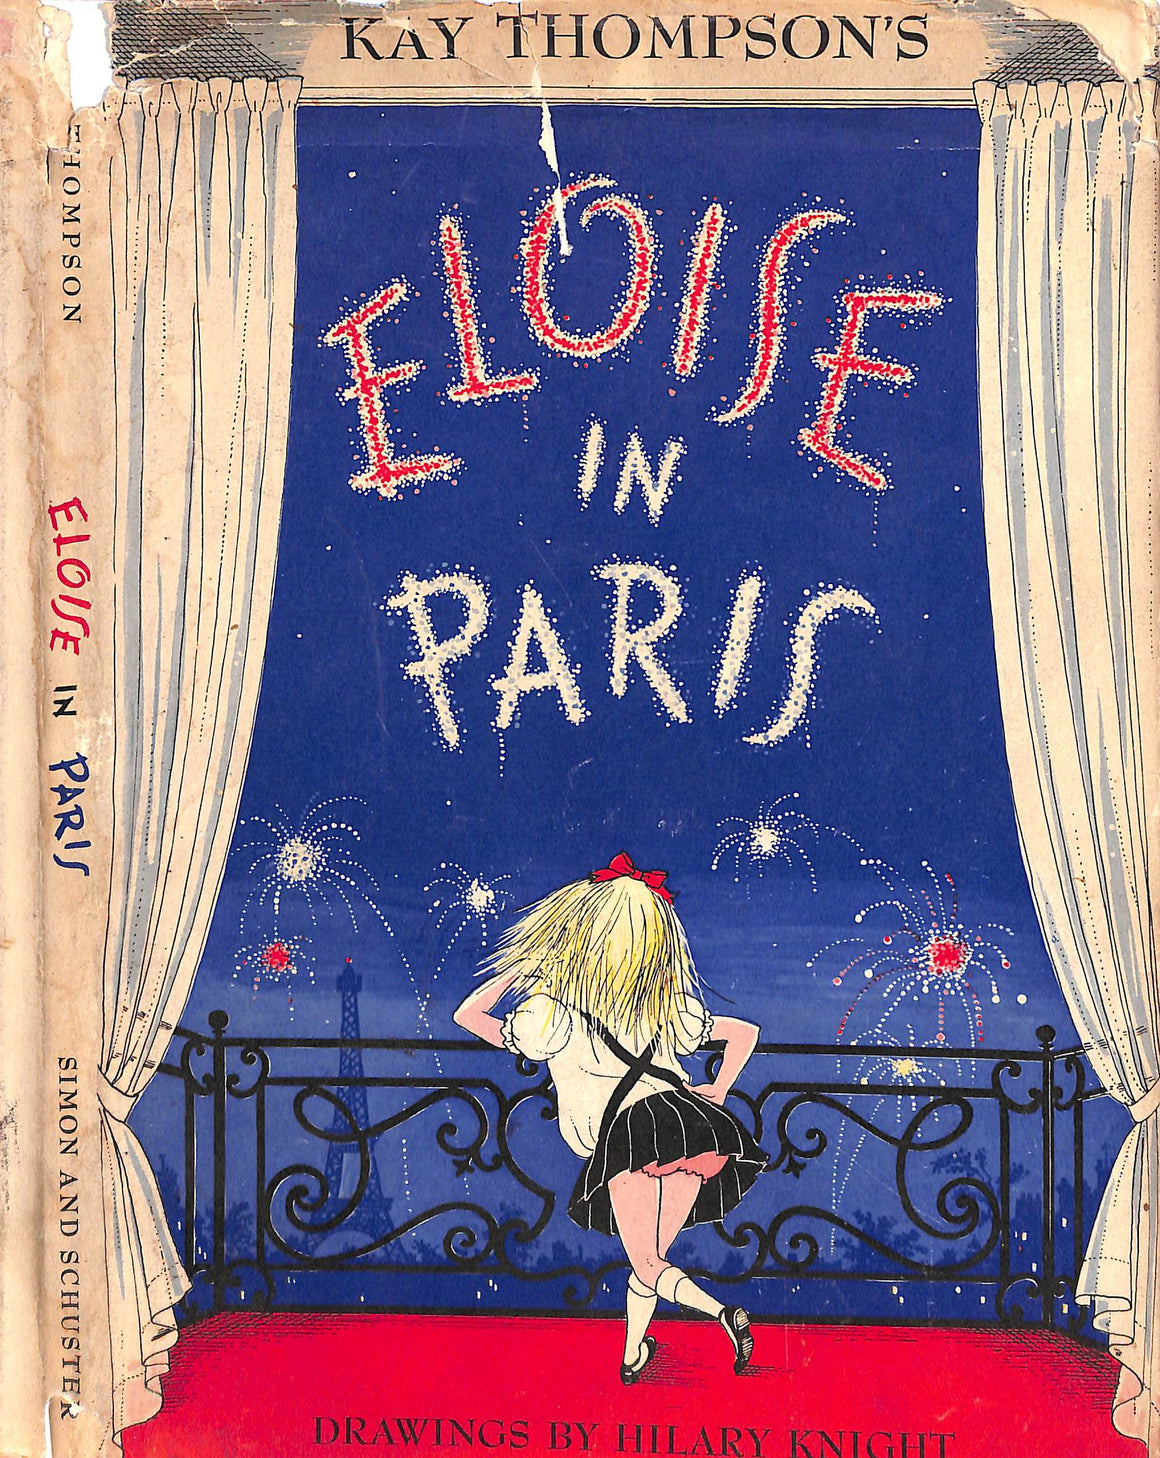 "Eloise in Paris" 1957 THOMPSON, Kay